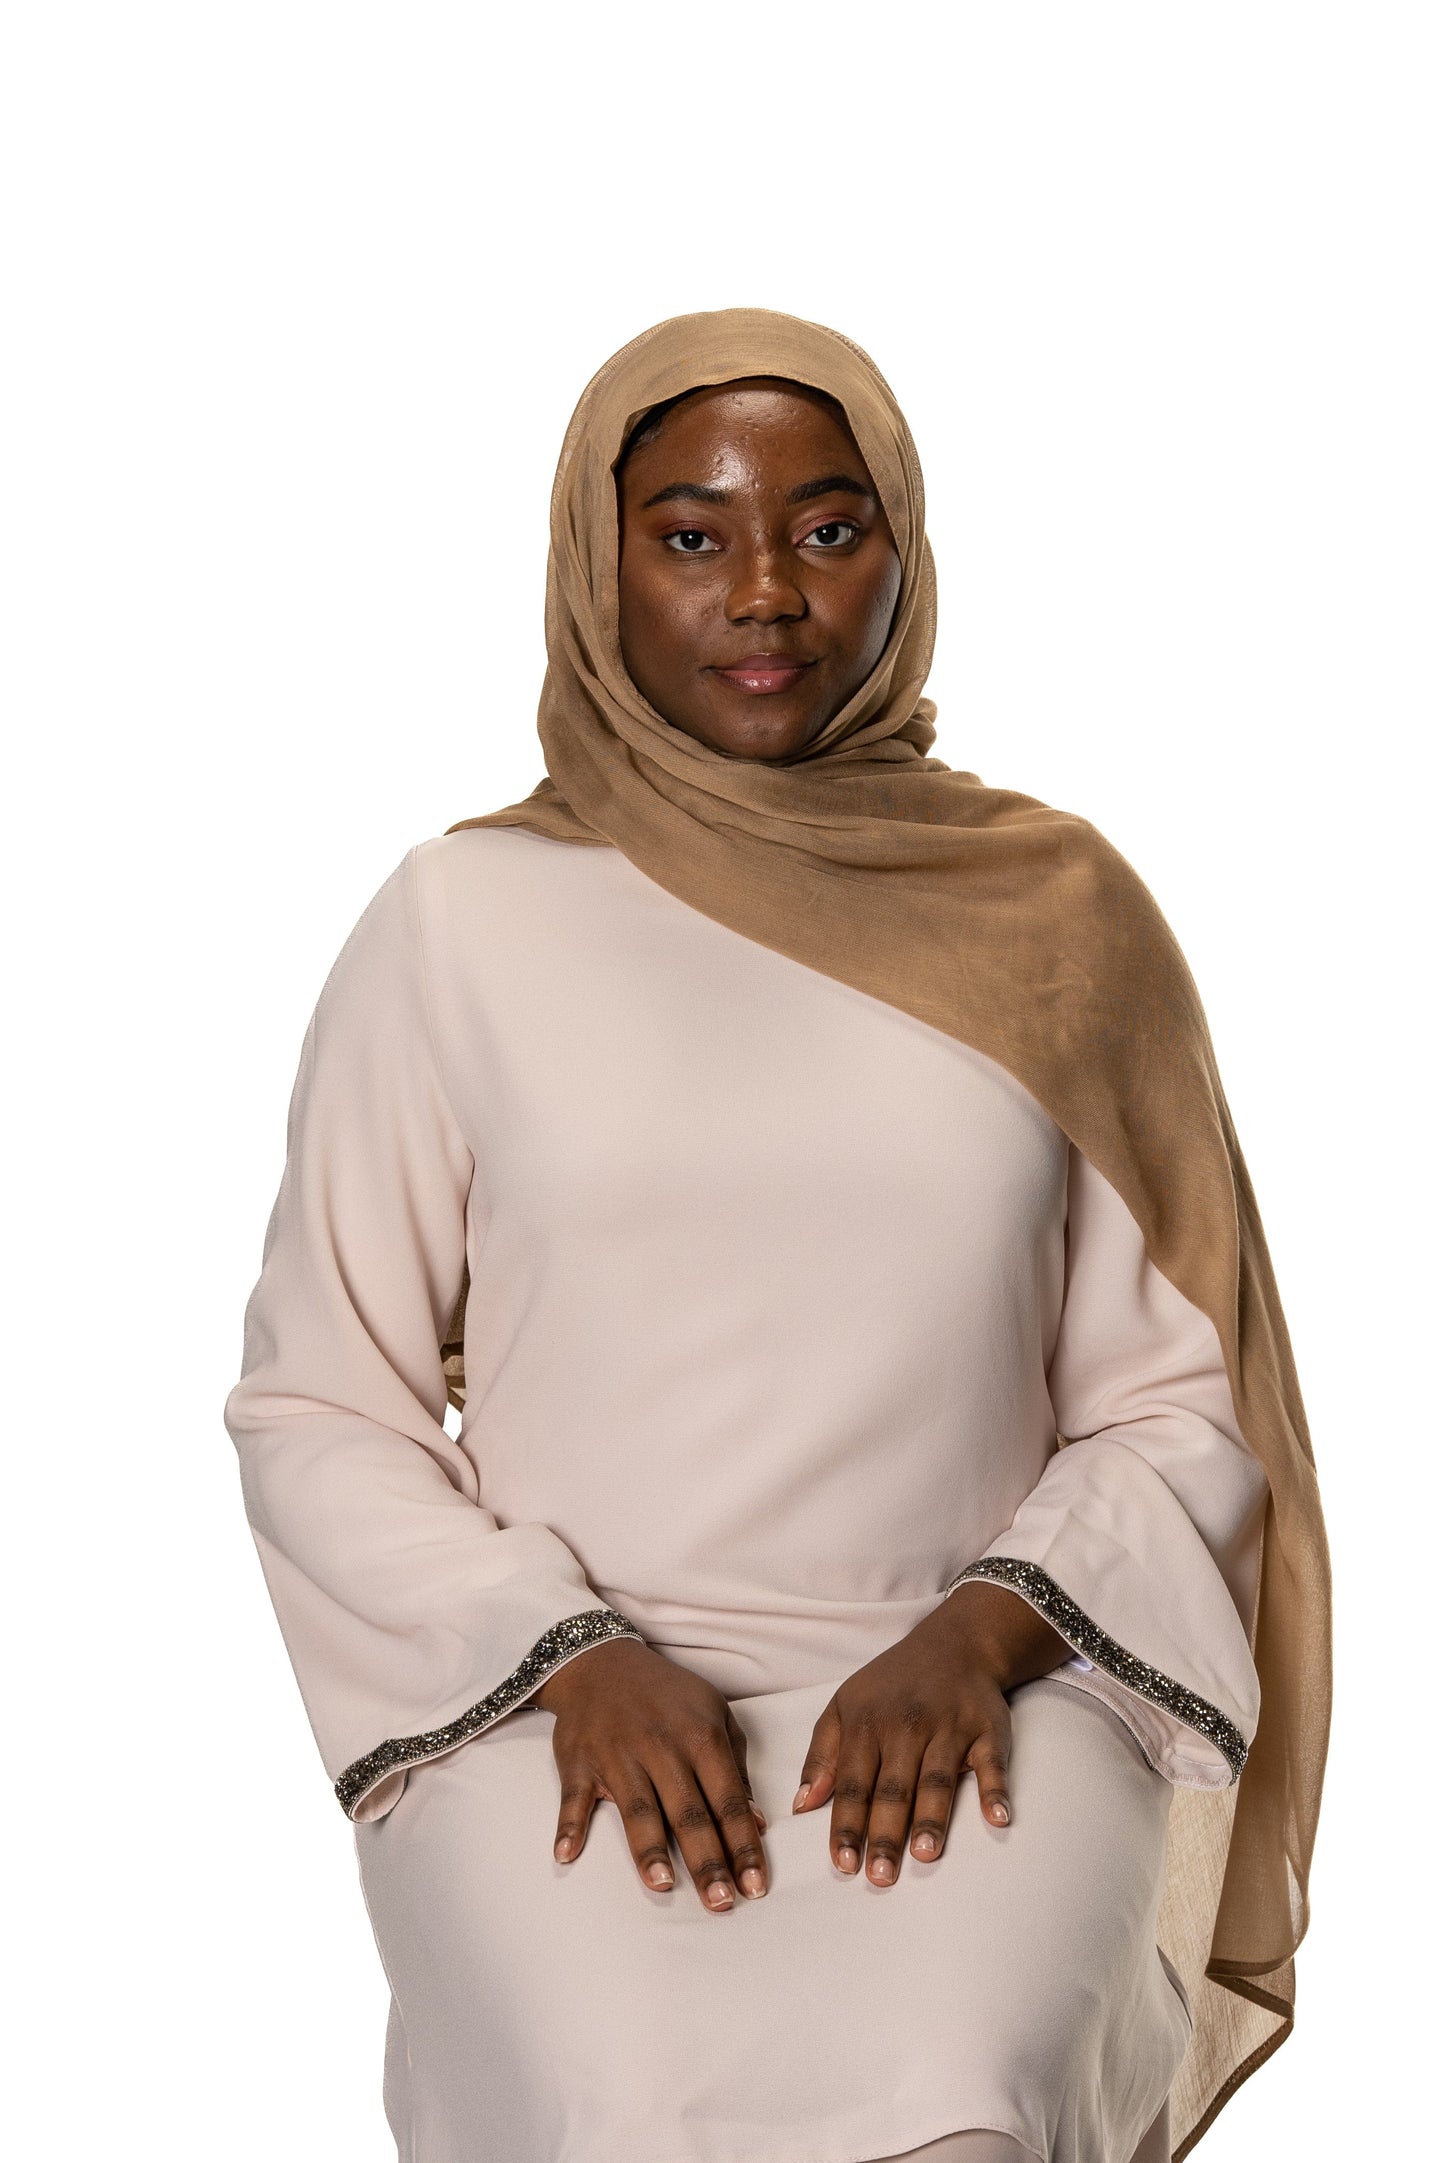 jolie Nisa Hijab Stay Cool and Comfortable with Jolie Nisa Bamboo Maxi Hijab - Lightweight, Breathable, and Stylish  Jolie Nisa Bamboo Maxi Hijab - Lightweight, Breathable,Comfortable